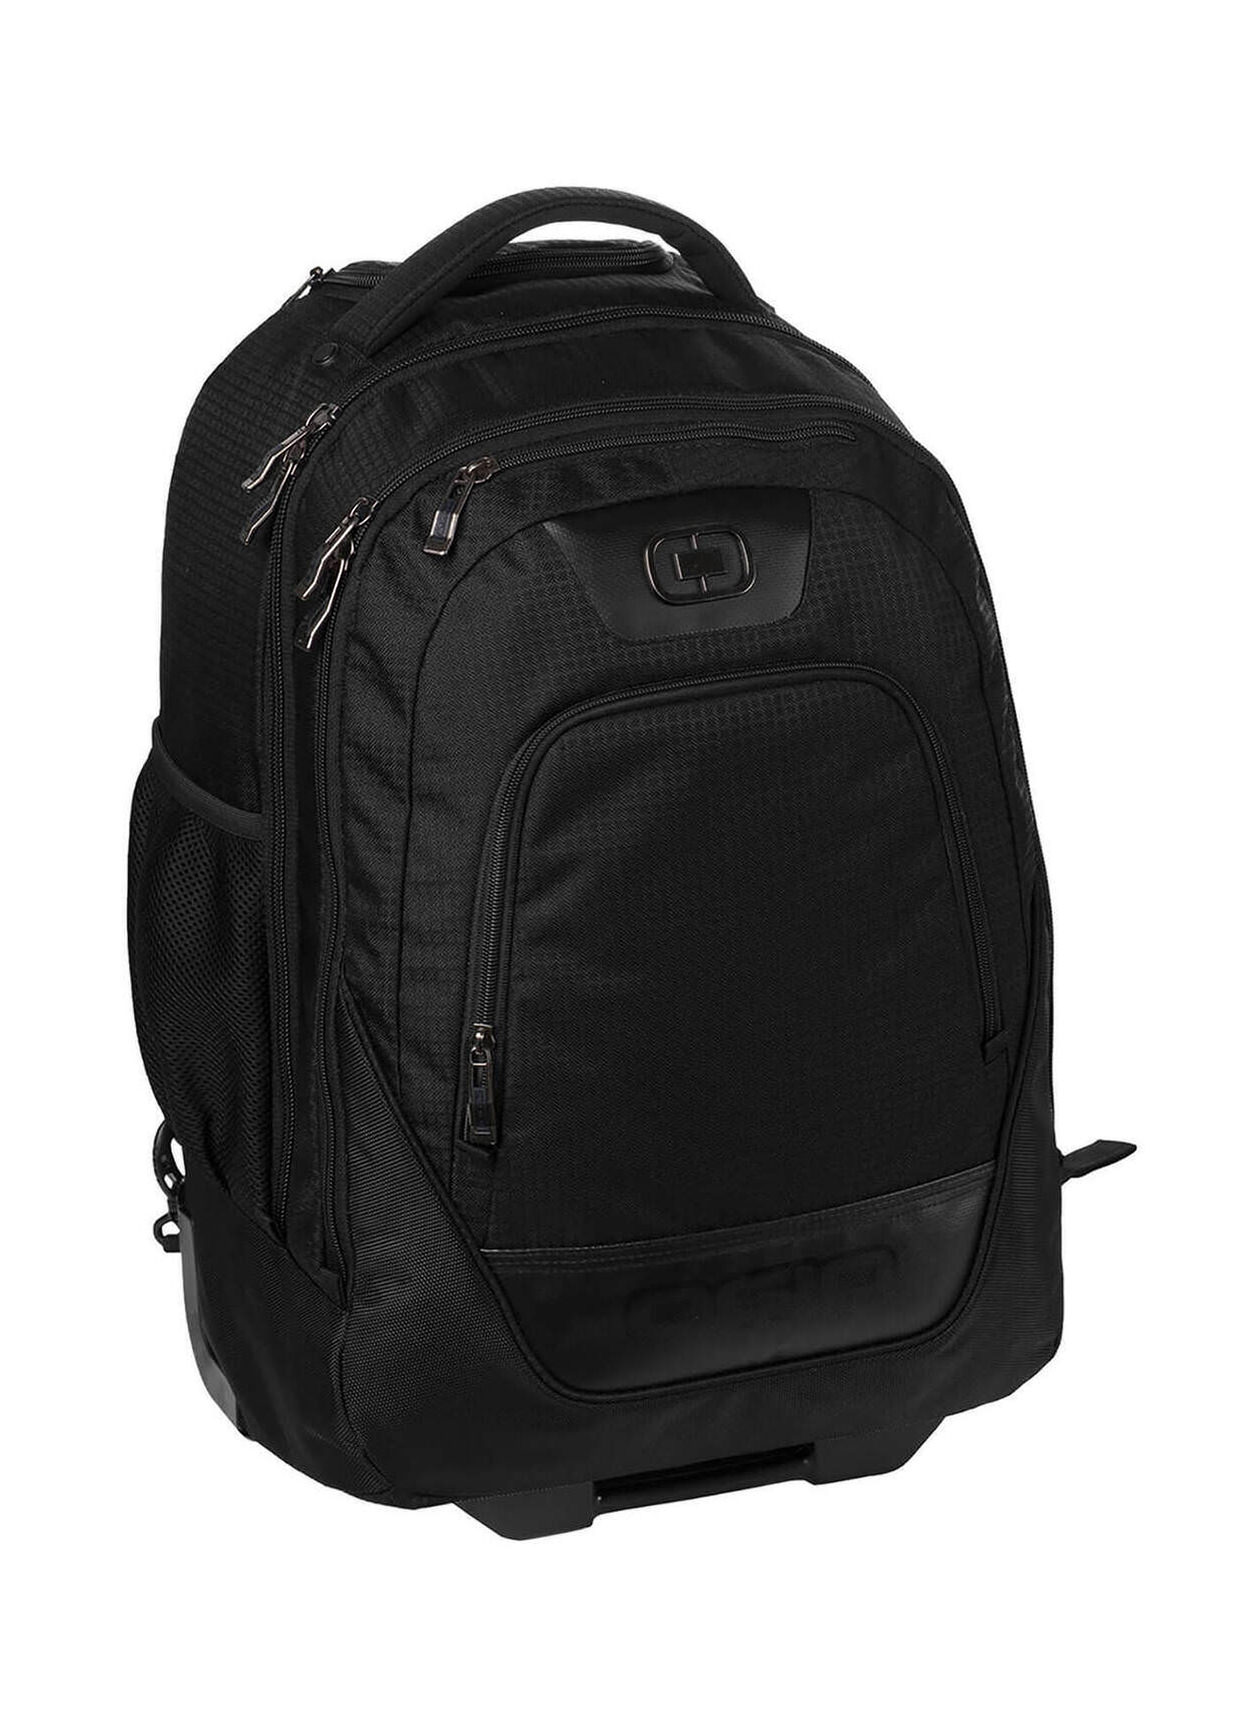 OGIO Black Wheelie Backpack